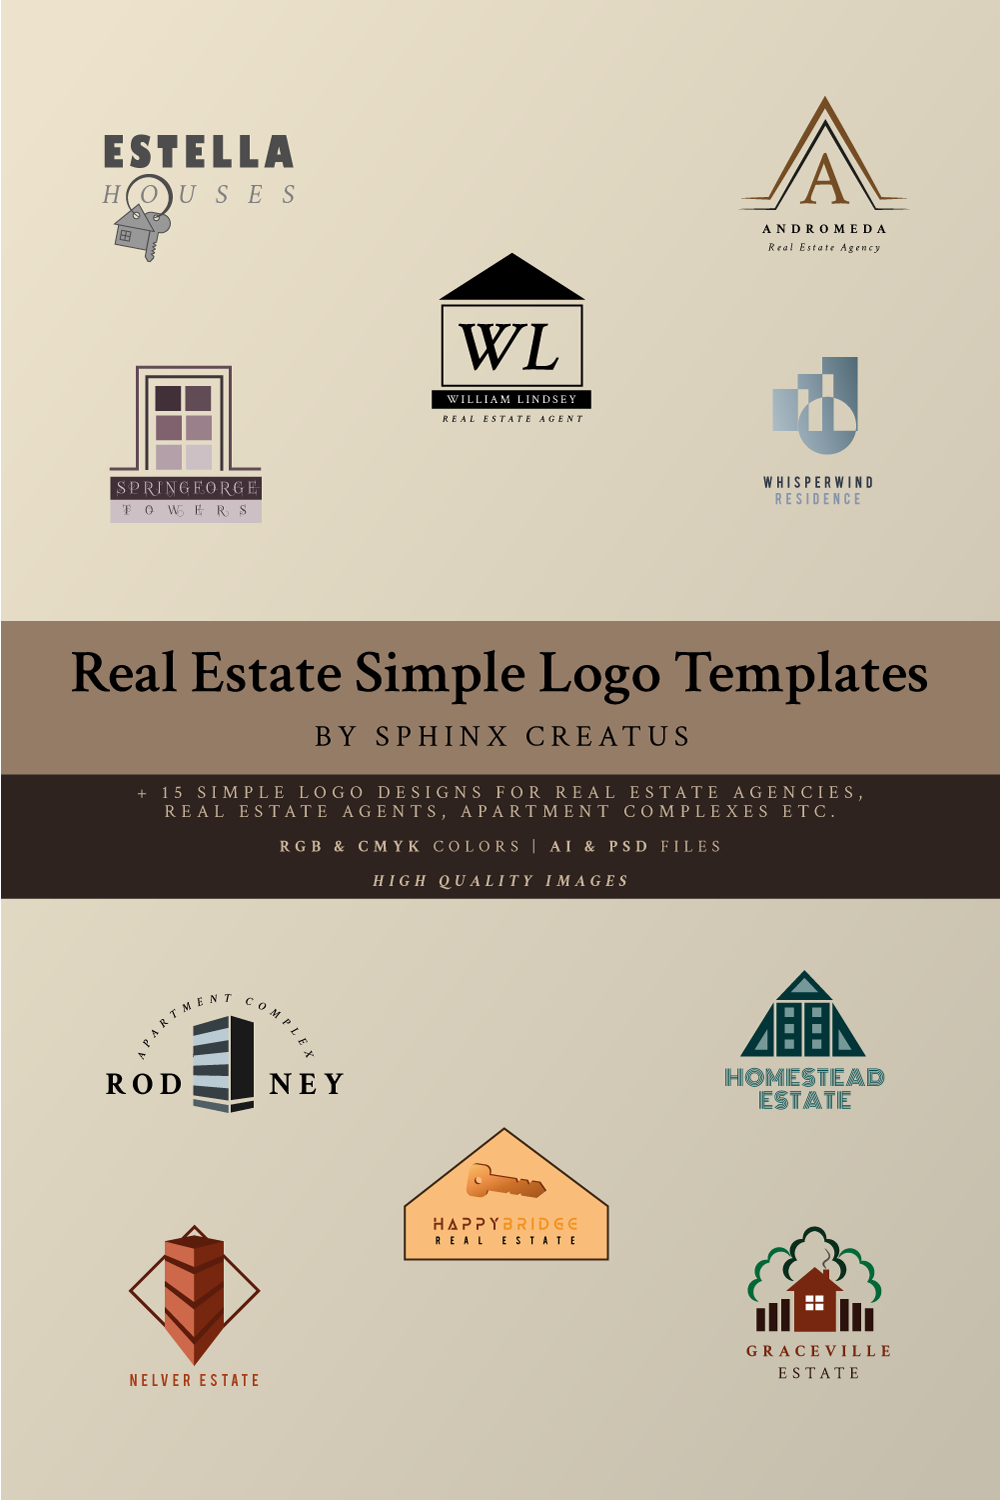 Real Estate Simple Logo Templates Pinterest Image.